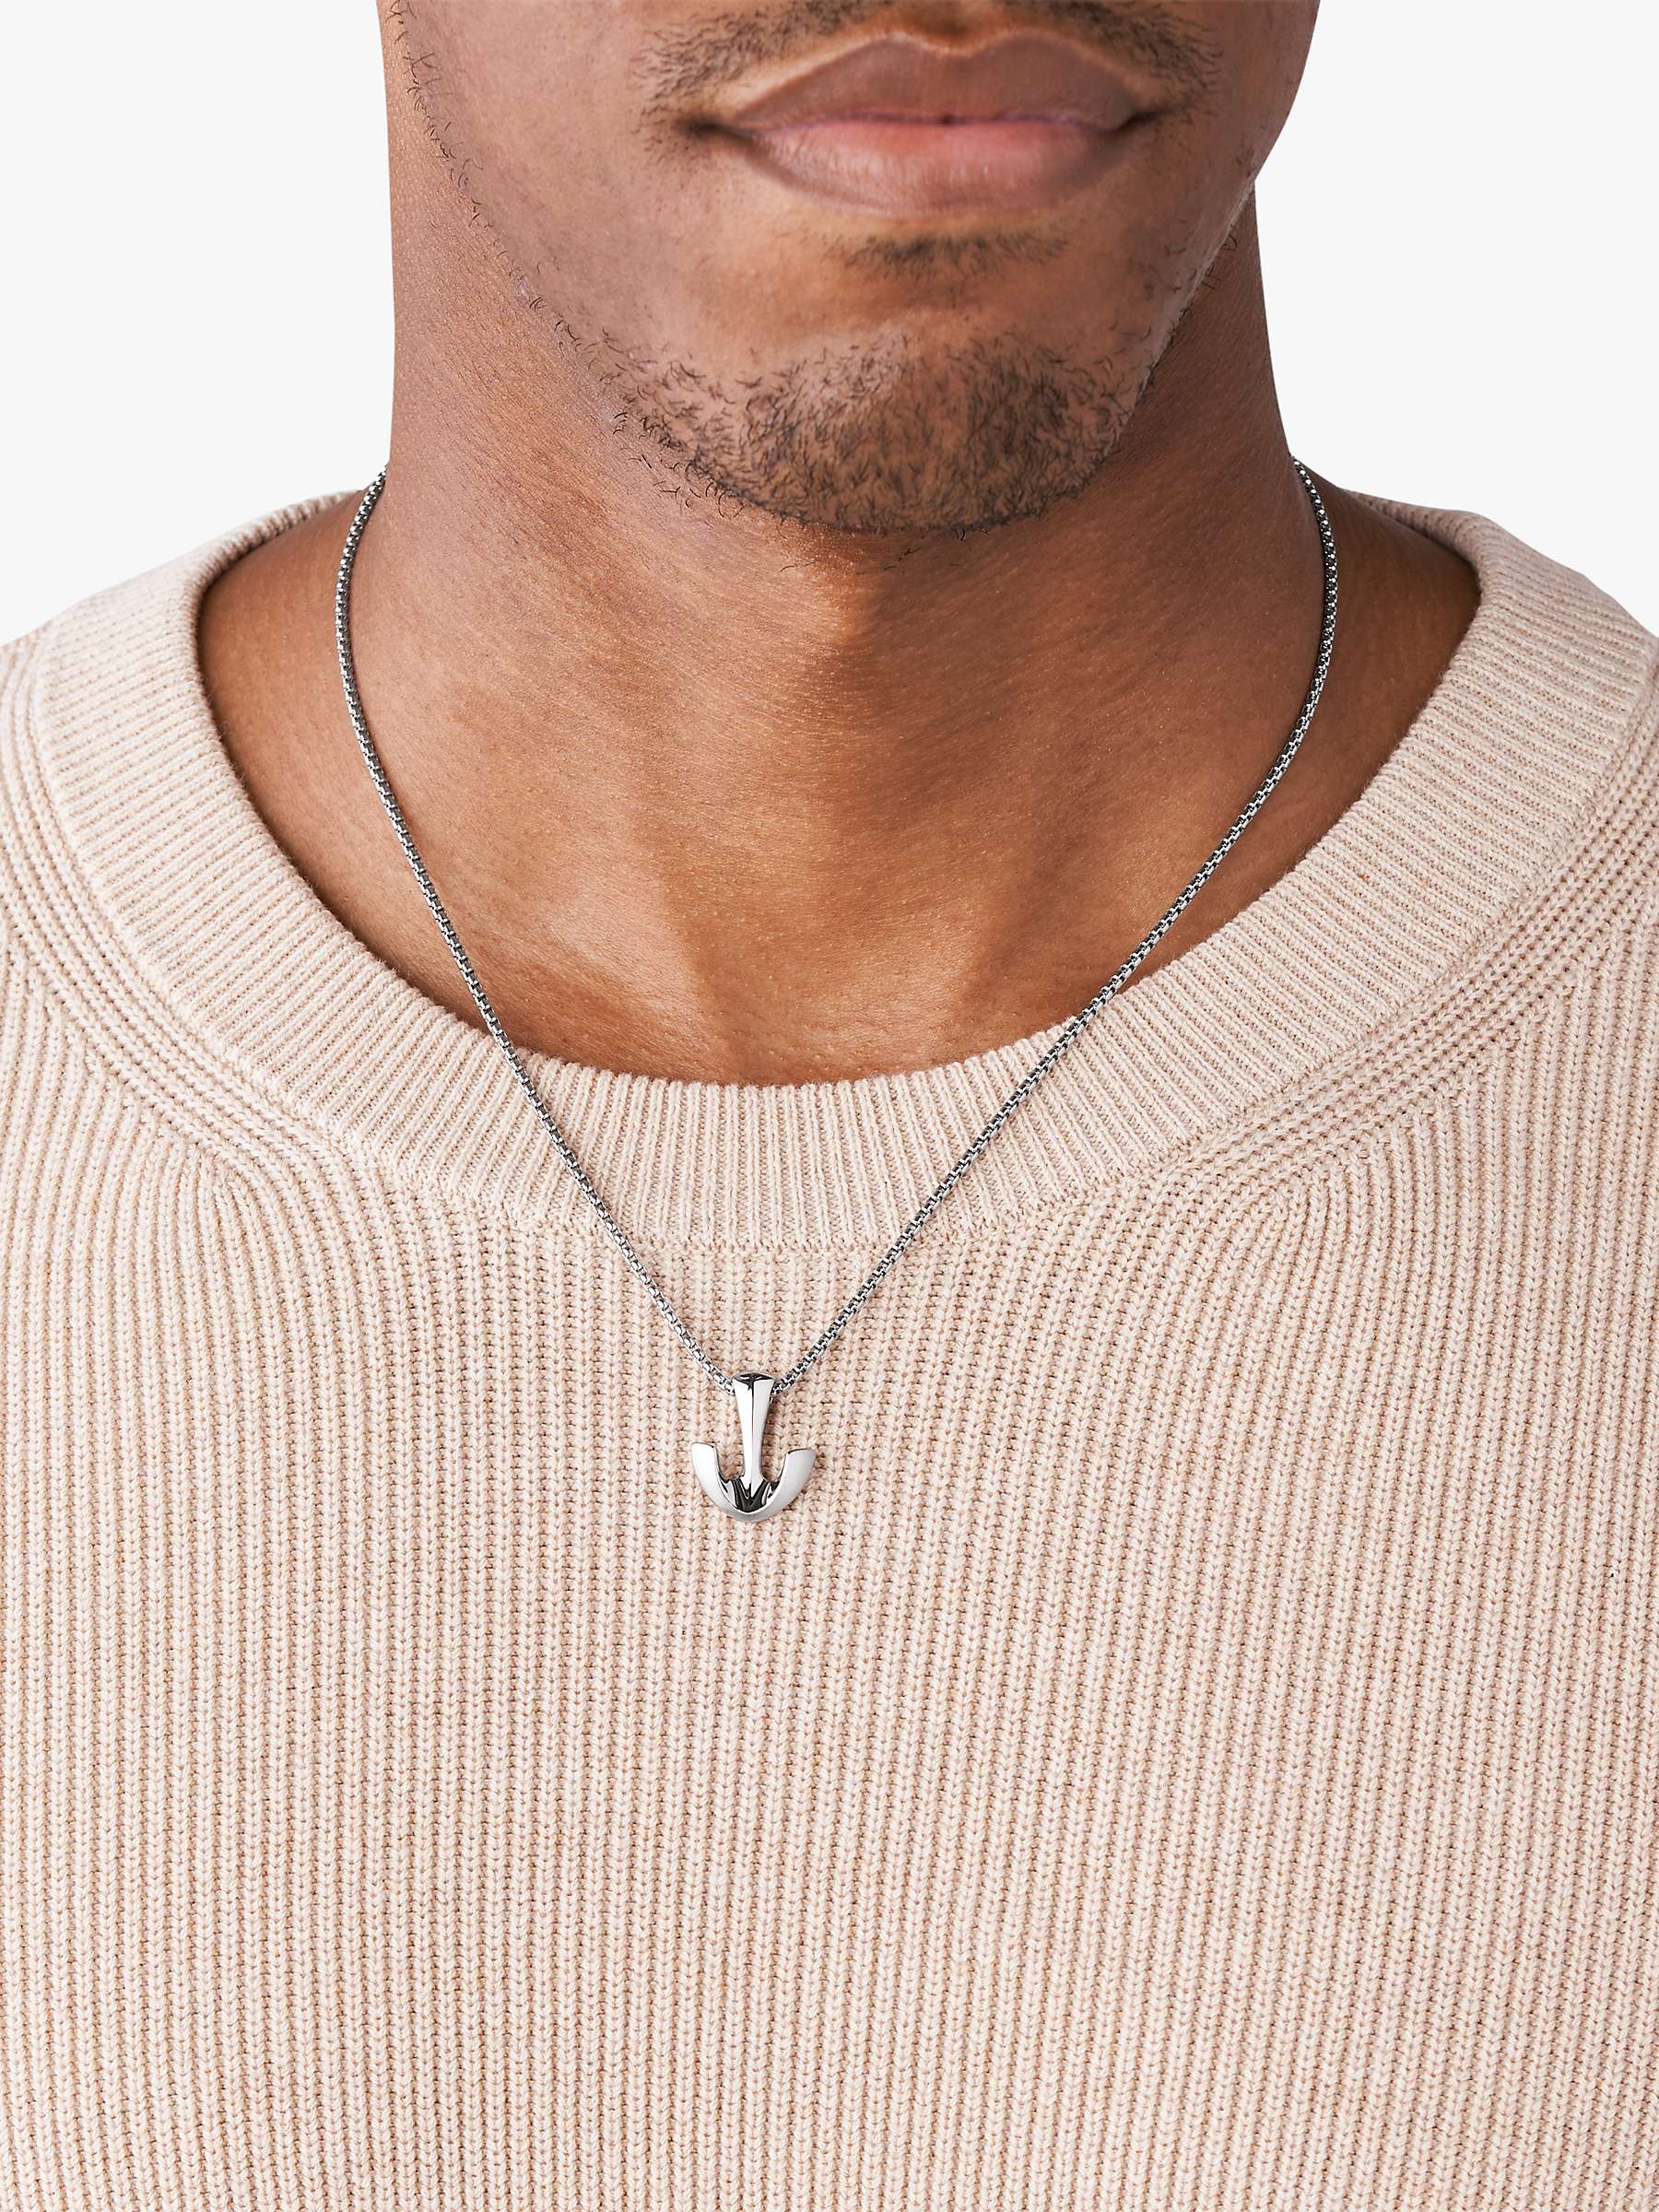 Buy Skagen Men's Anchor Pendant Necklace, Silver Online at johnlewis.com